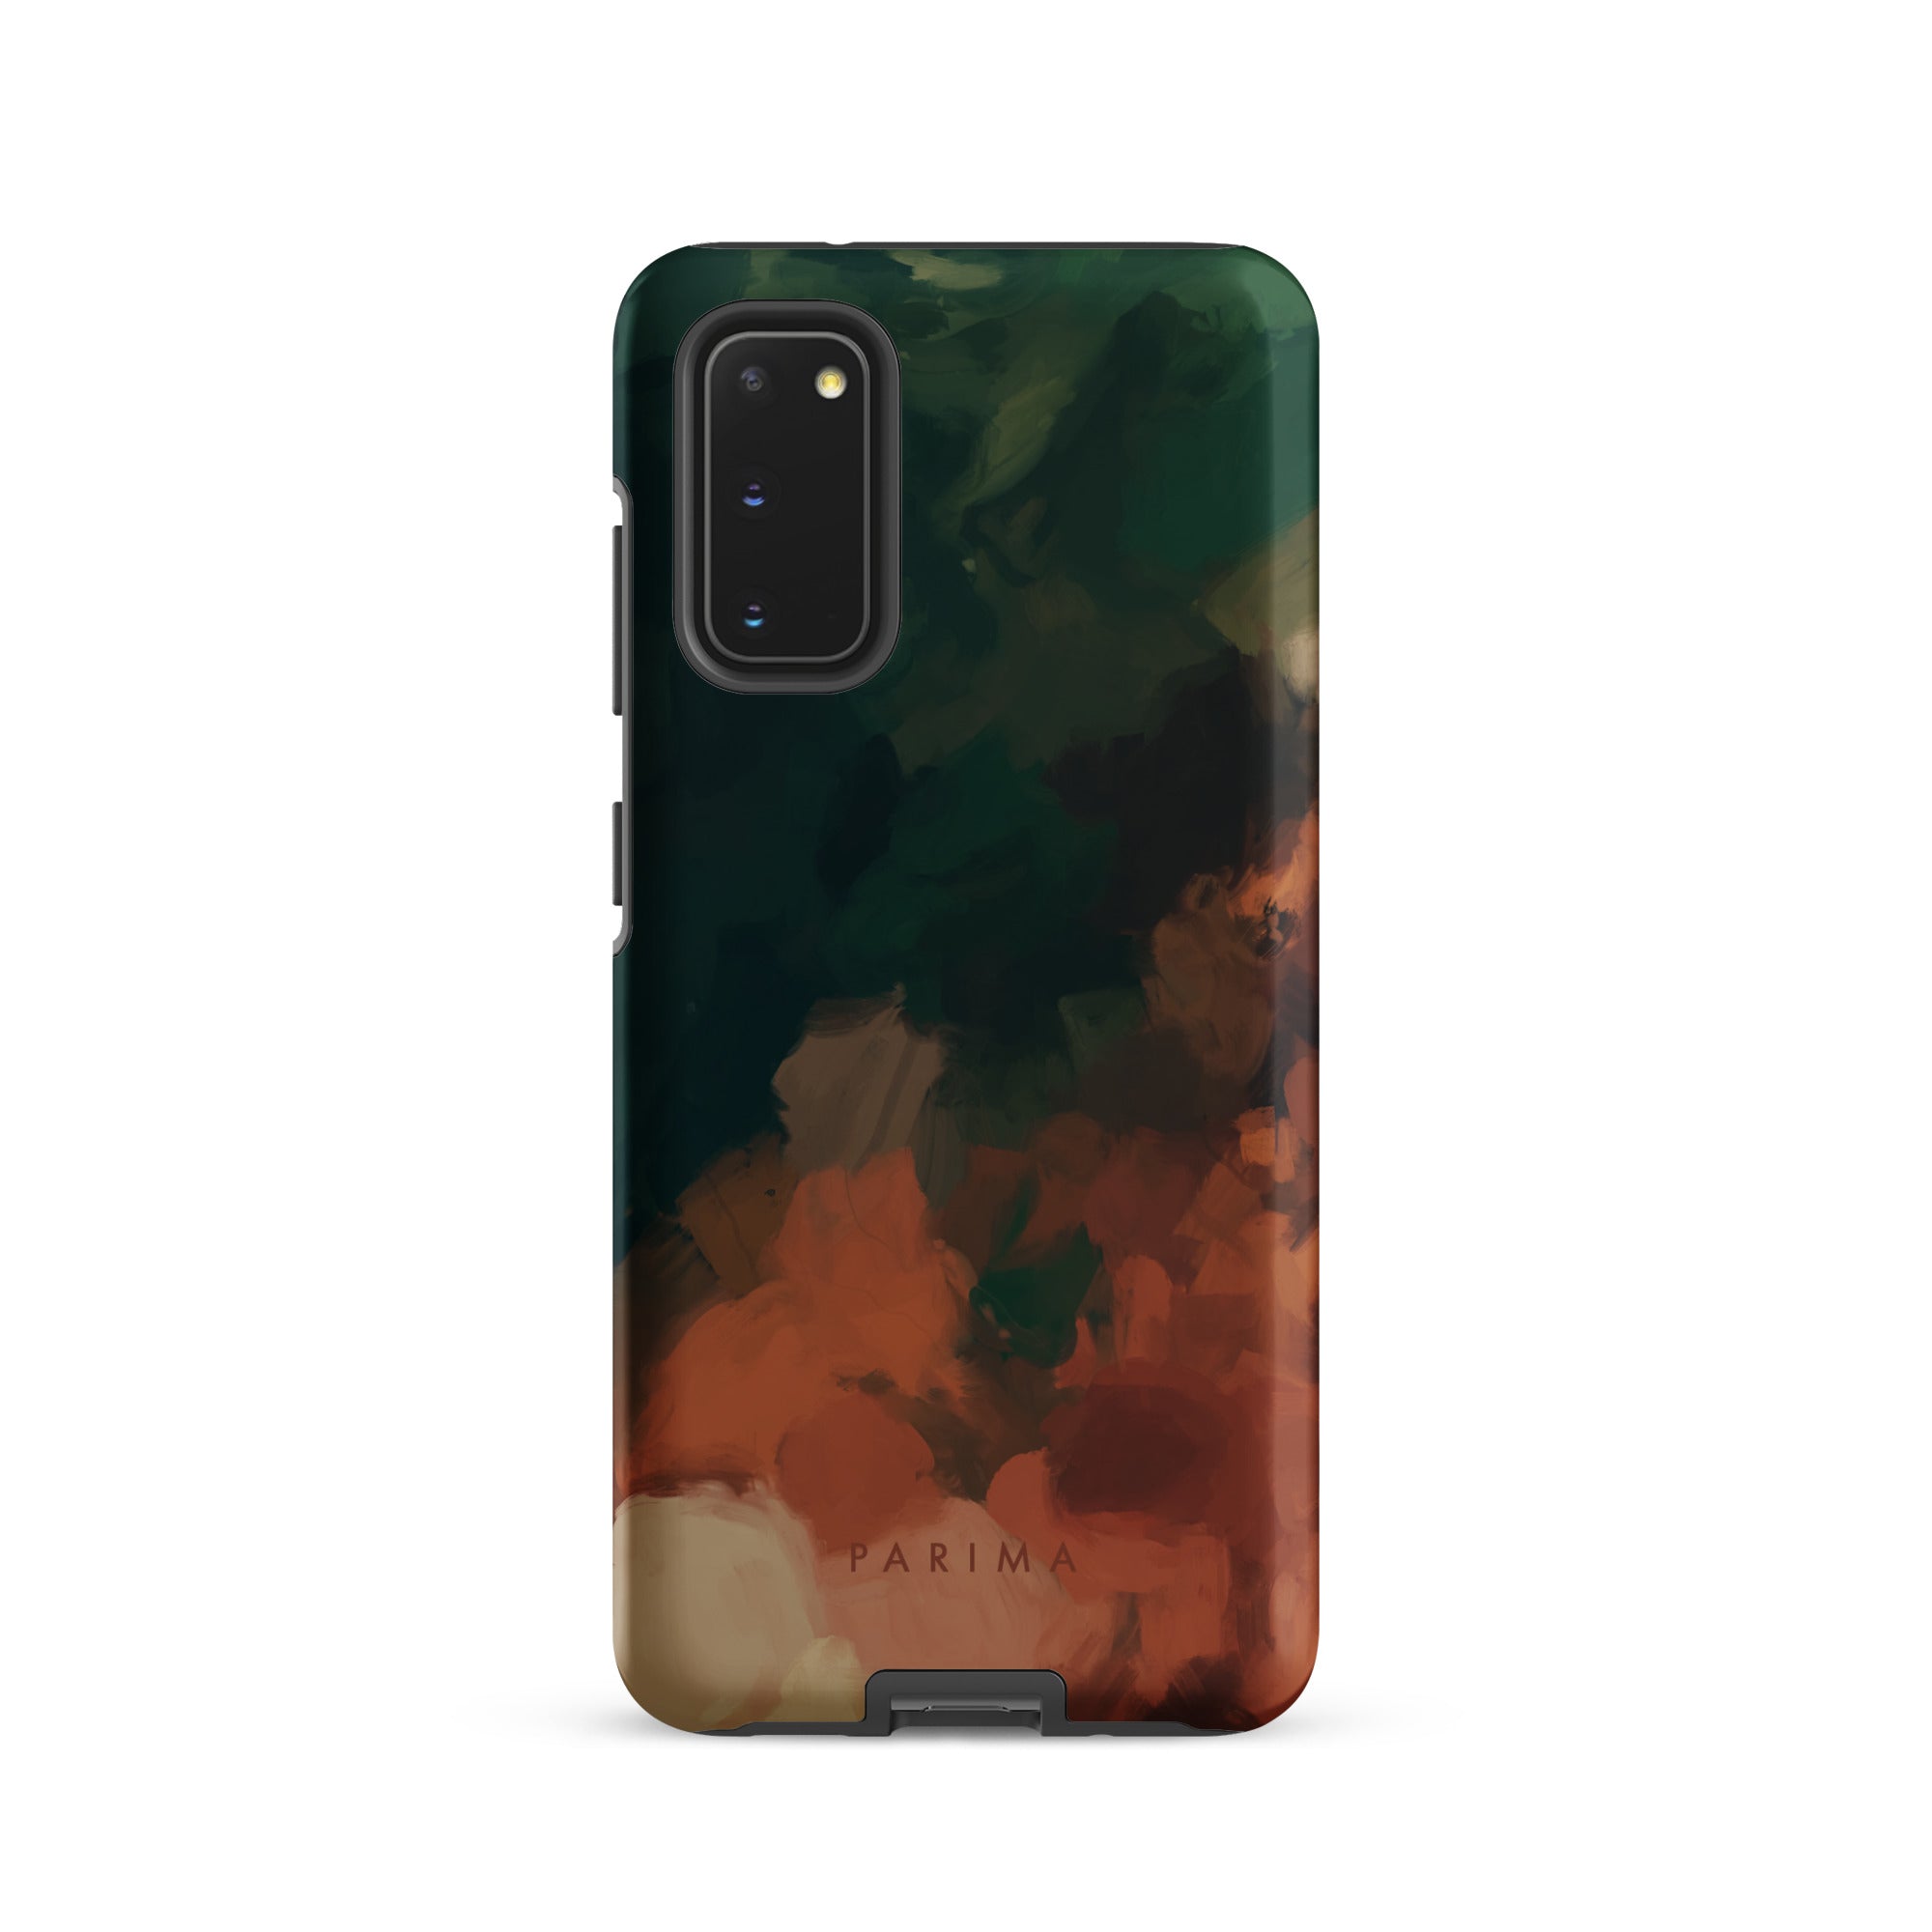 Cedar, green and brown abstract art on Samsung Galaxy S20 tough case by Parima Studio